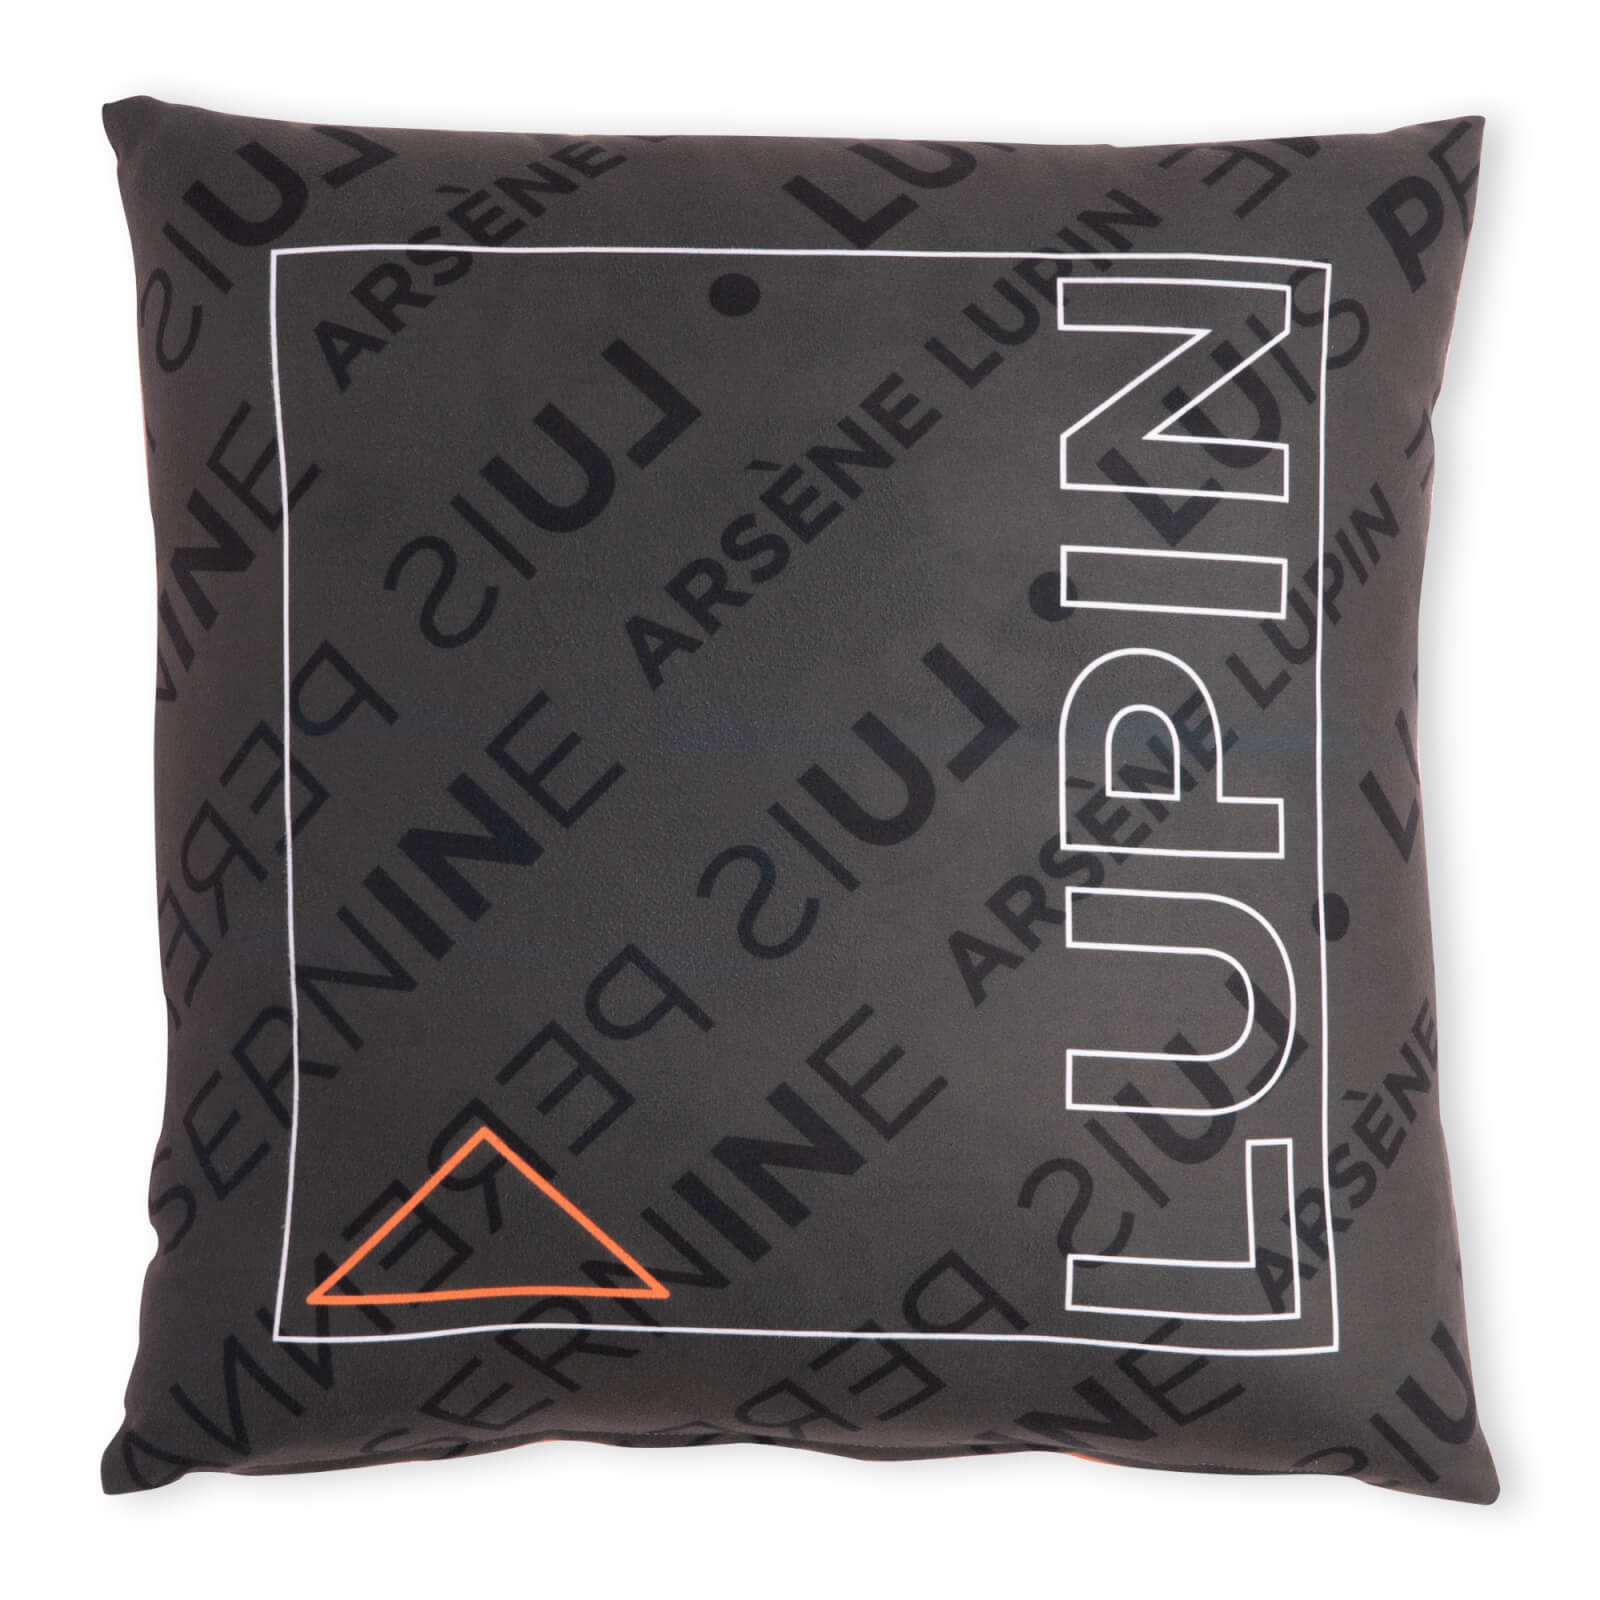 Lupin Alias Square Cushion - 60x60cm